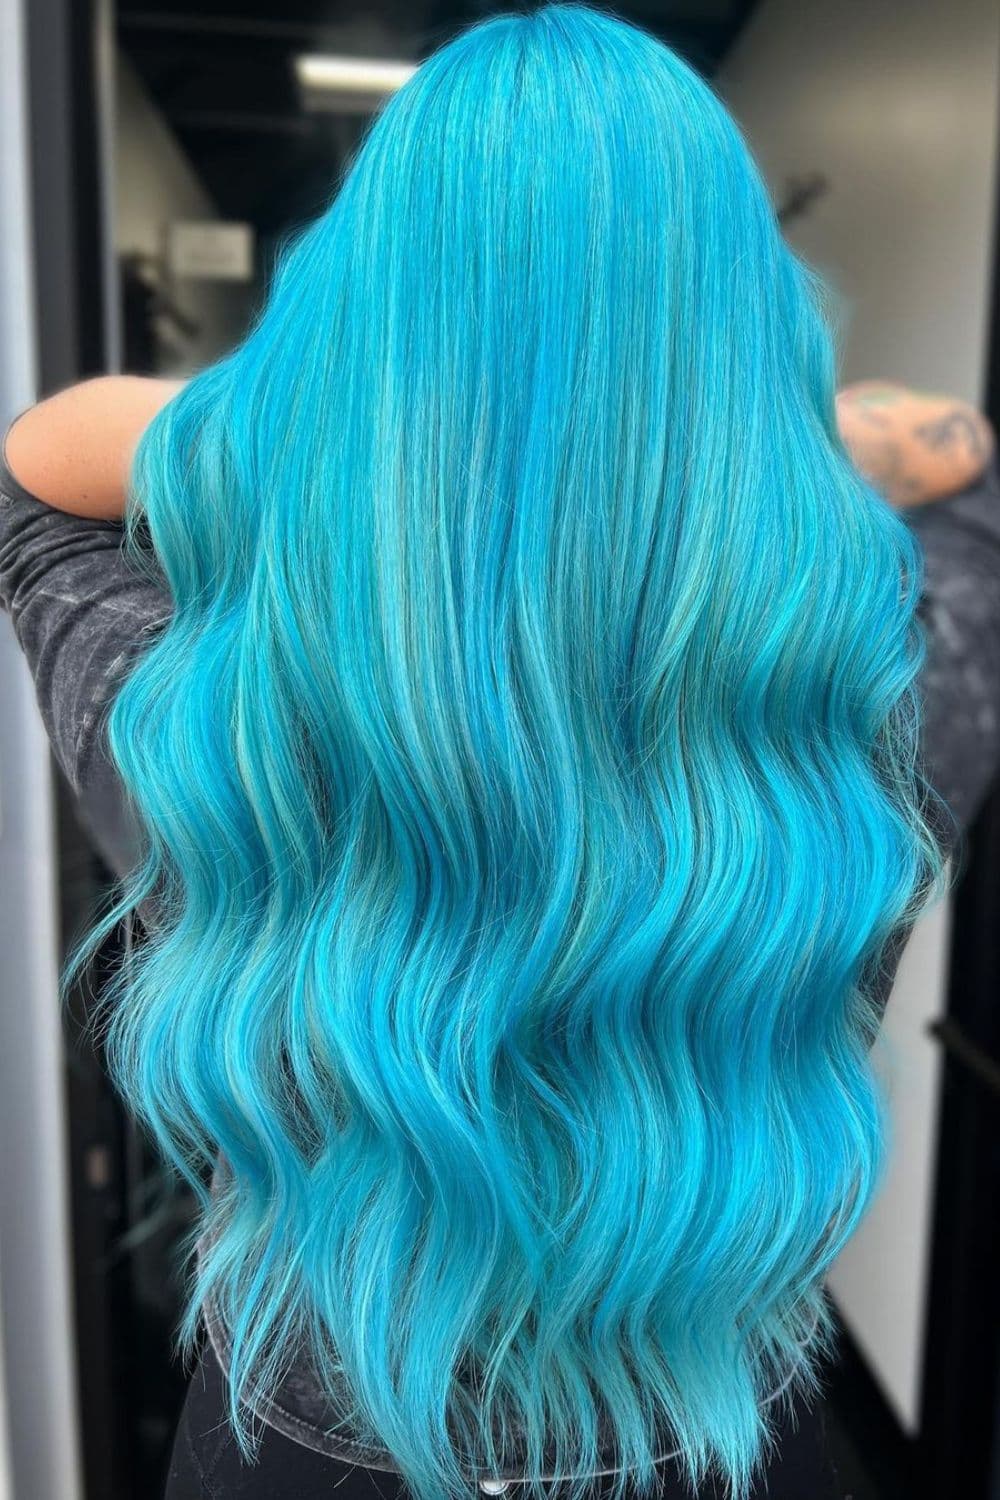 A woman with long wavy aqua blue hair.